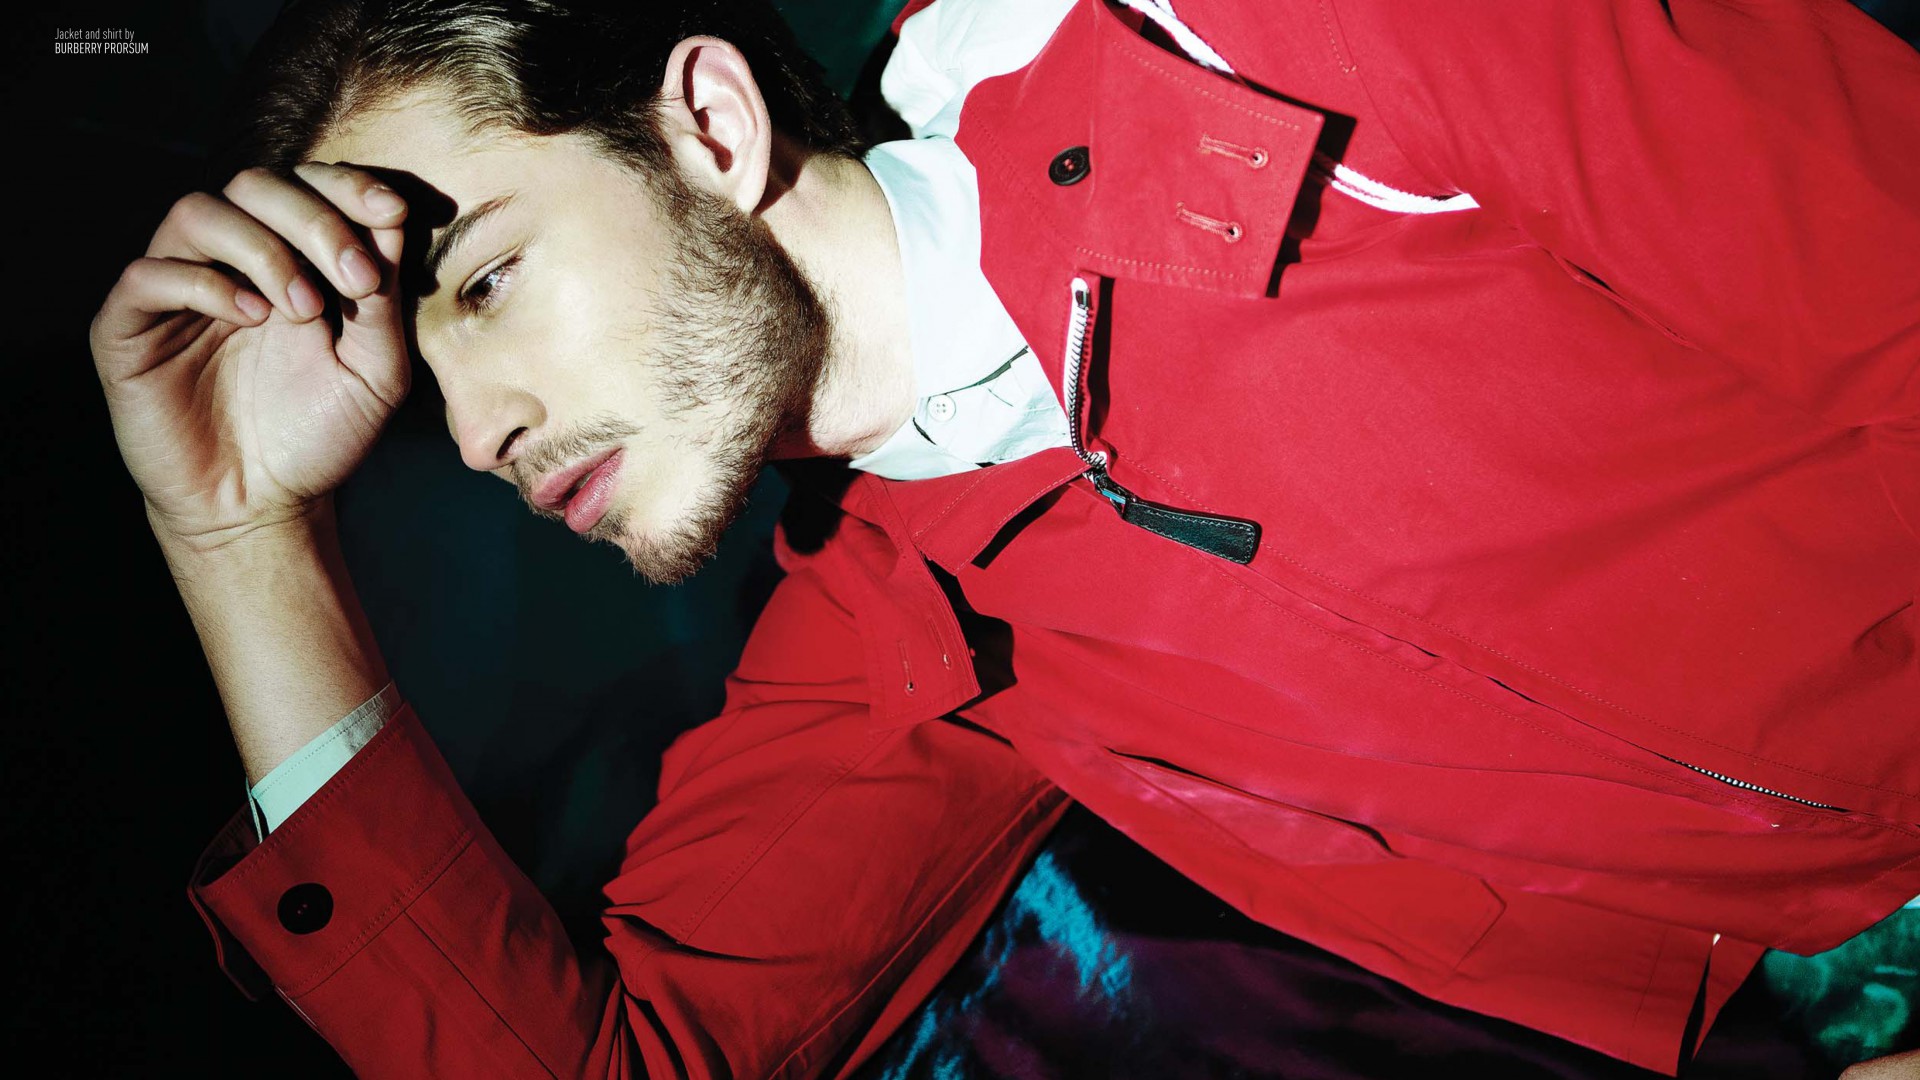 Франциско Ляховски, Топ Модель 2015, модель, красная кофта, Francisco Lachowski, Top Fashion Male Models, model, red shirt (horizontal)